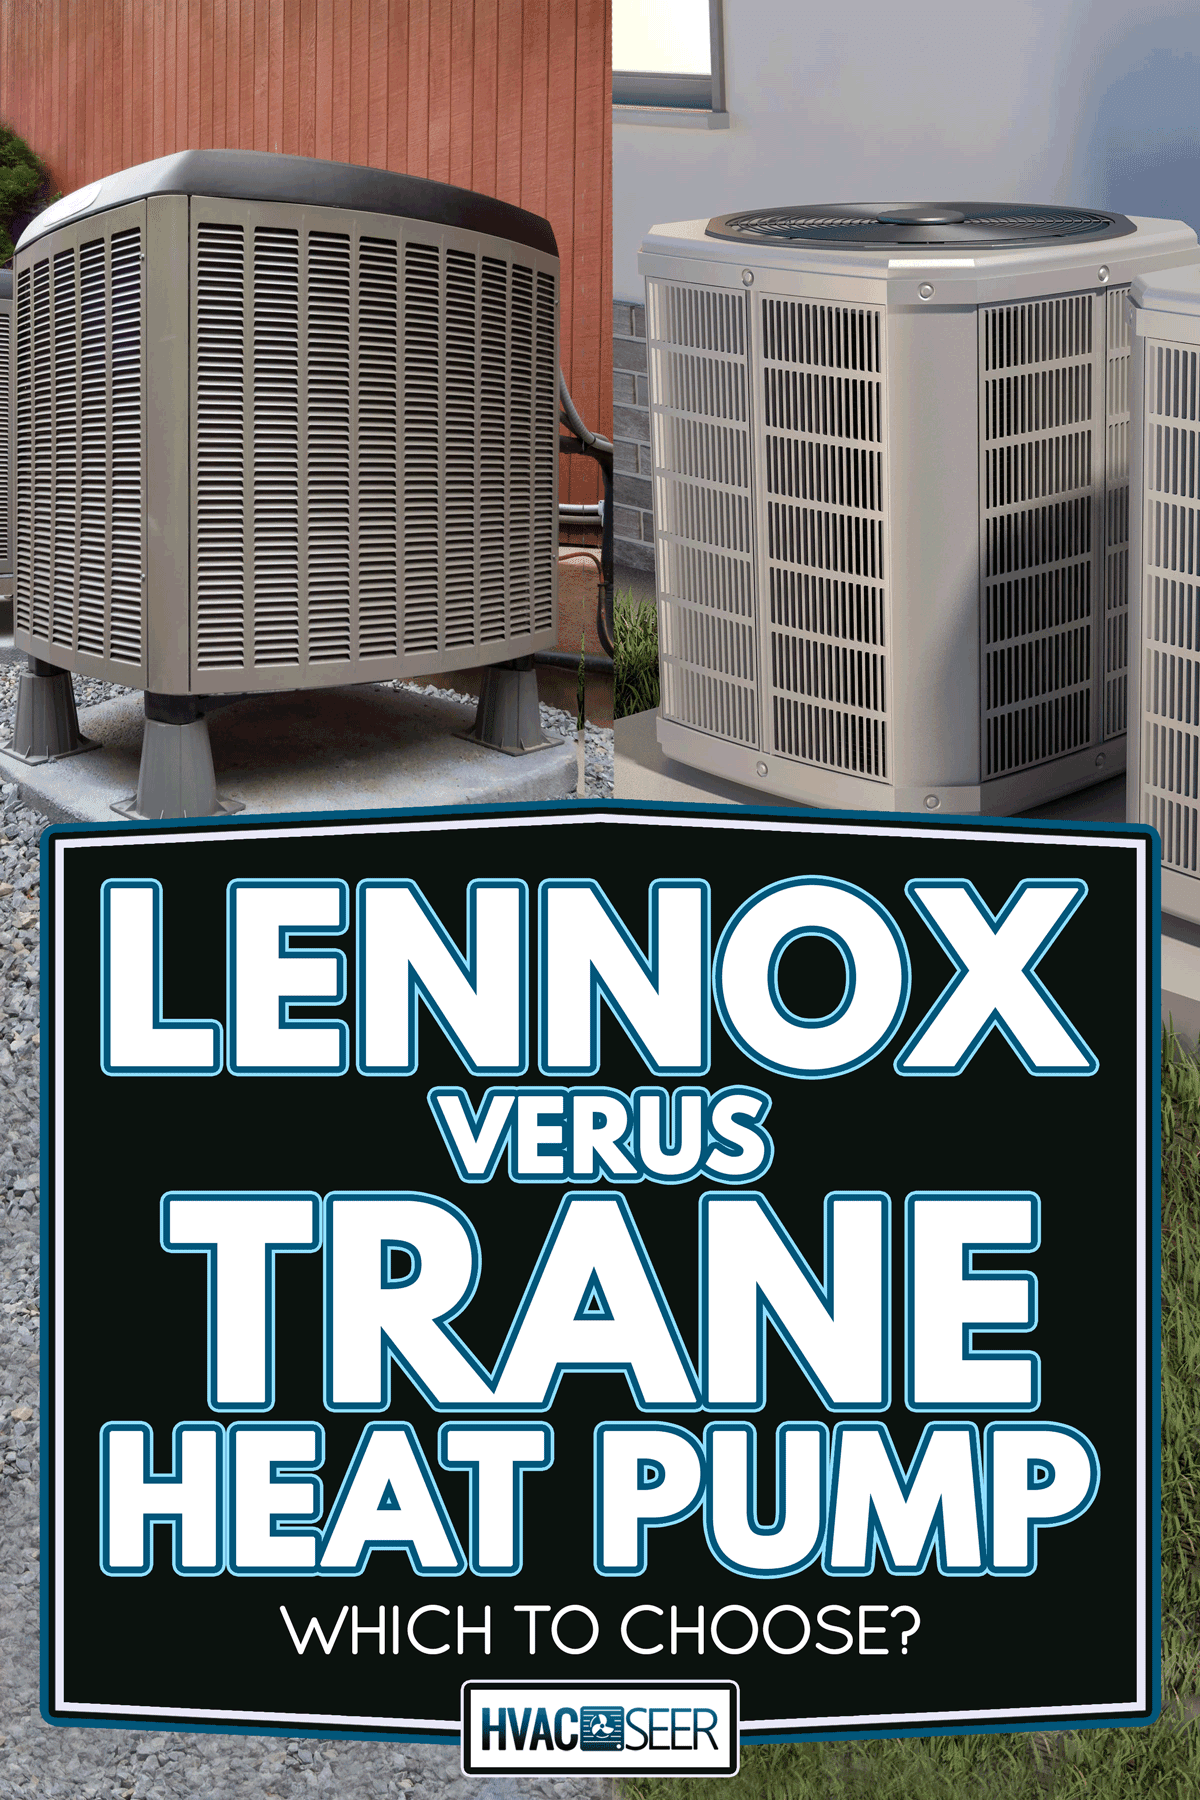 Comparison between lennox and trane heat pump, Lennox VS Trane Heat Pump: Which To Choose?